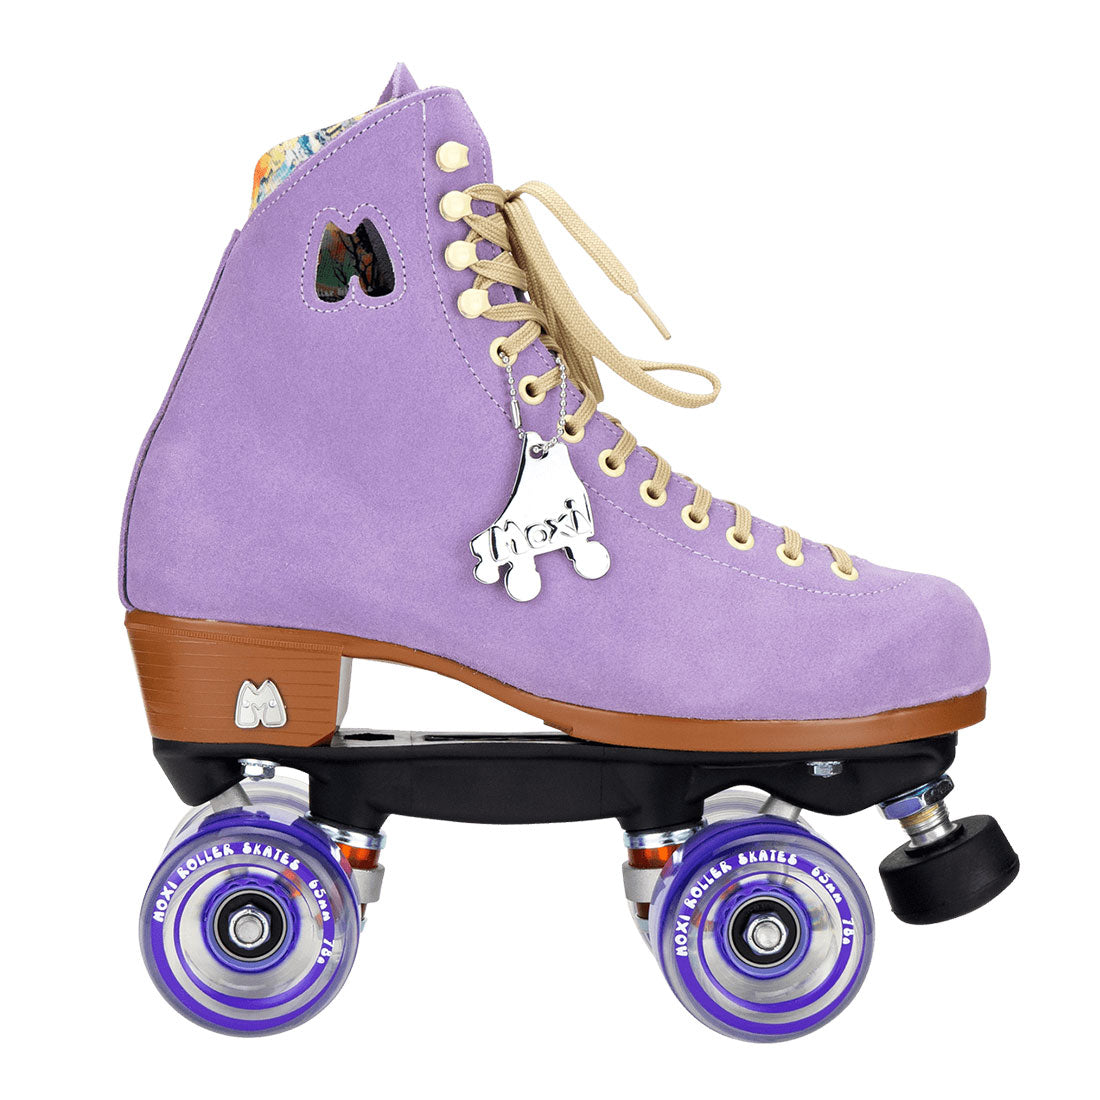 Moxi Lolly Skate - Lilac Roller Skates